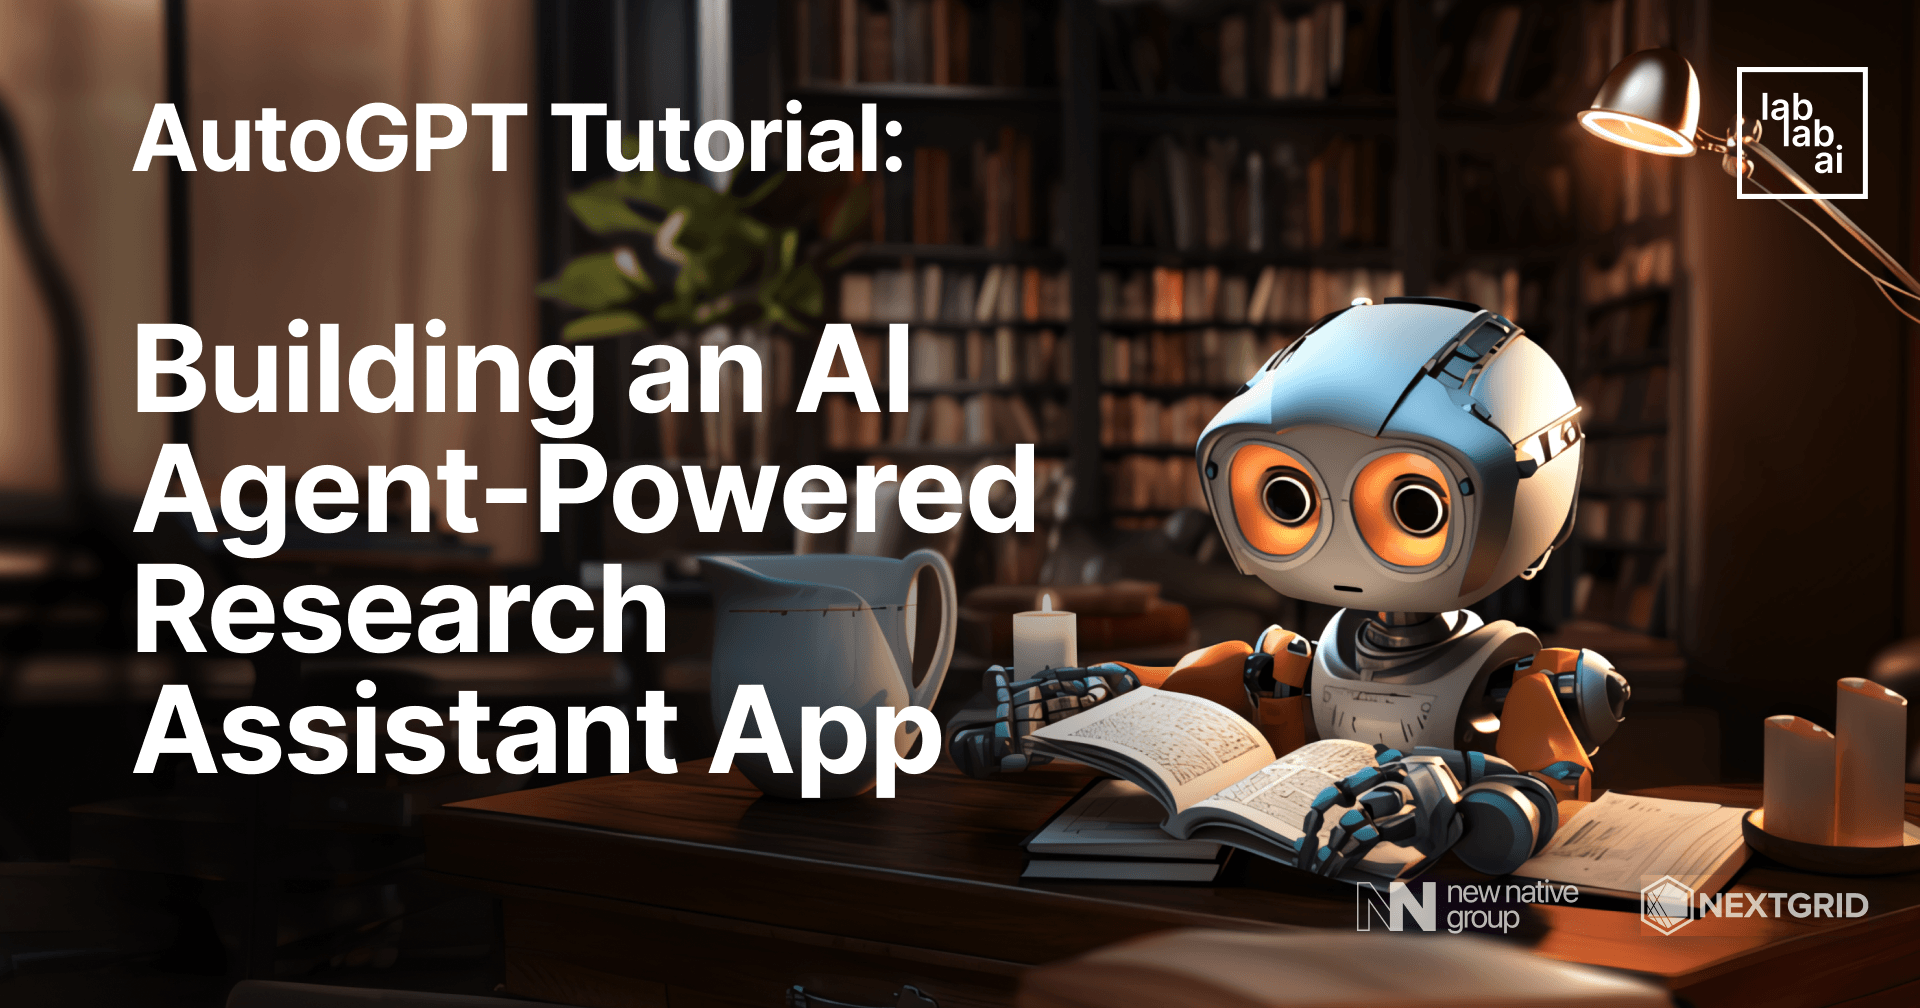 AutoGPT Tutorial: Building an AI Agent-Powered Research Assistant App